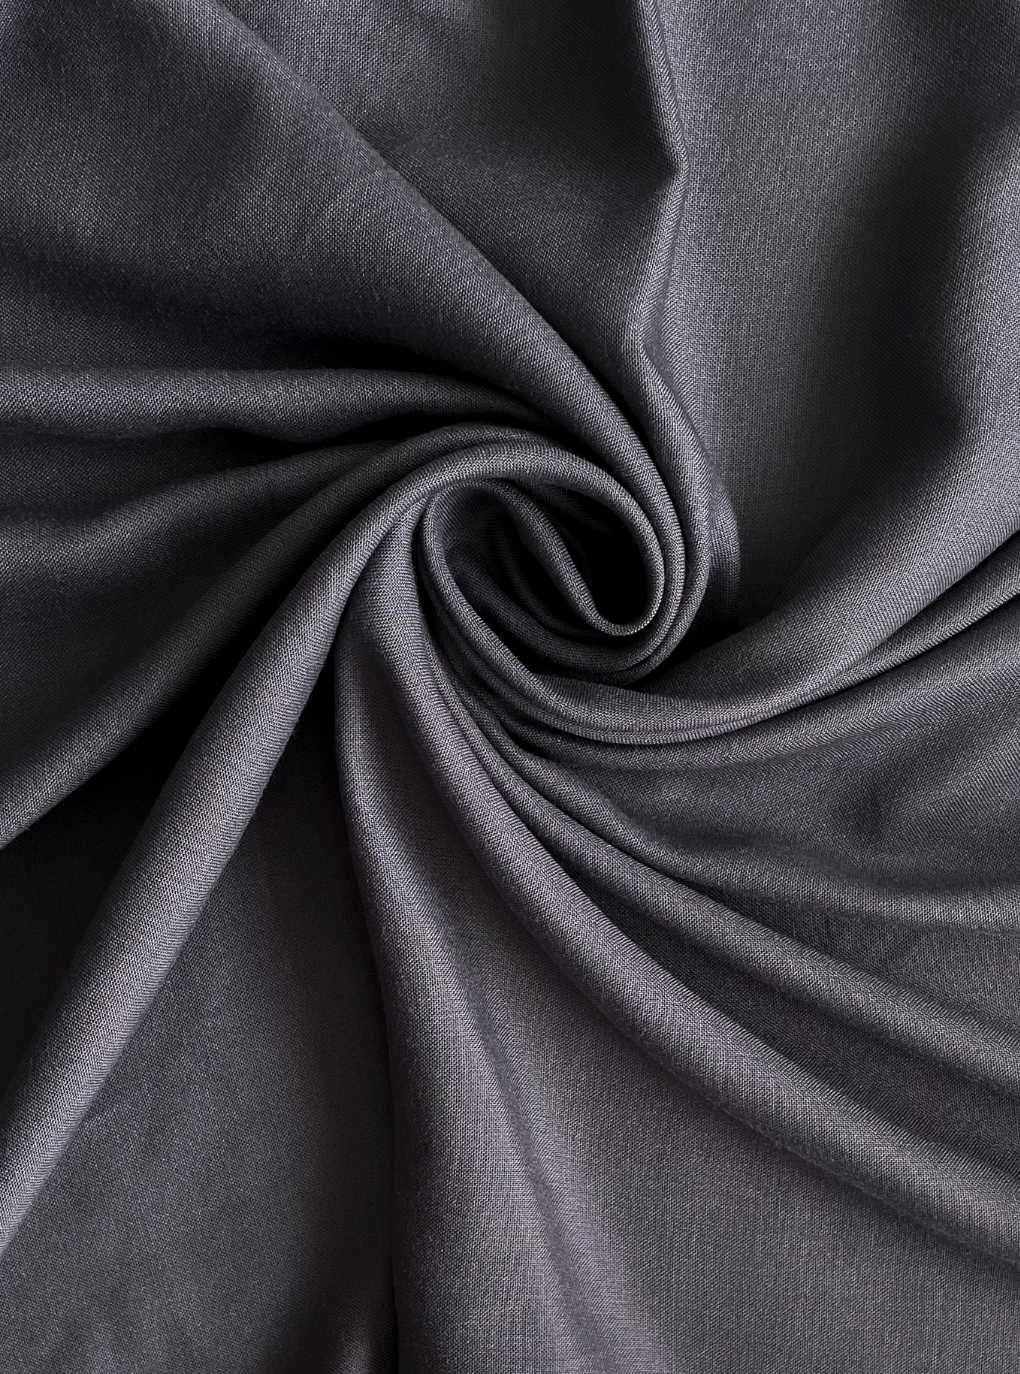 Fabric Pandit Cut Piece (CUT PIECE) Charcoal Grey Color Pure Rayon Fabric